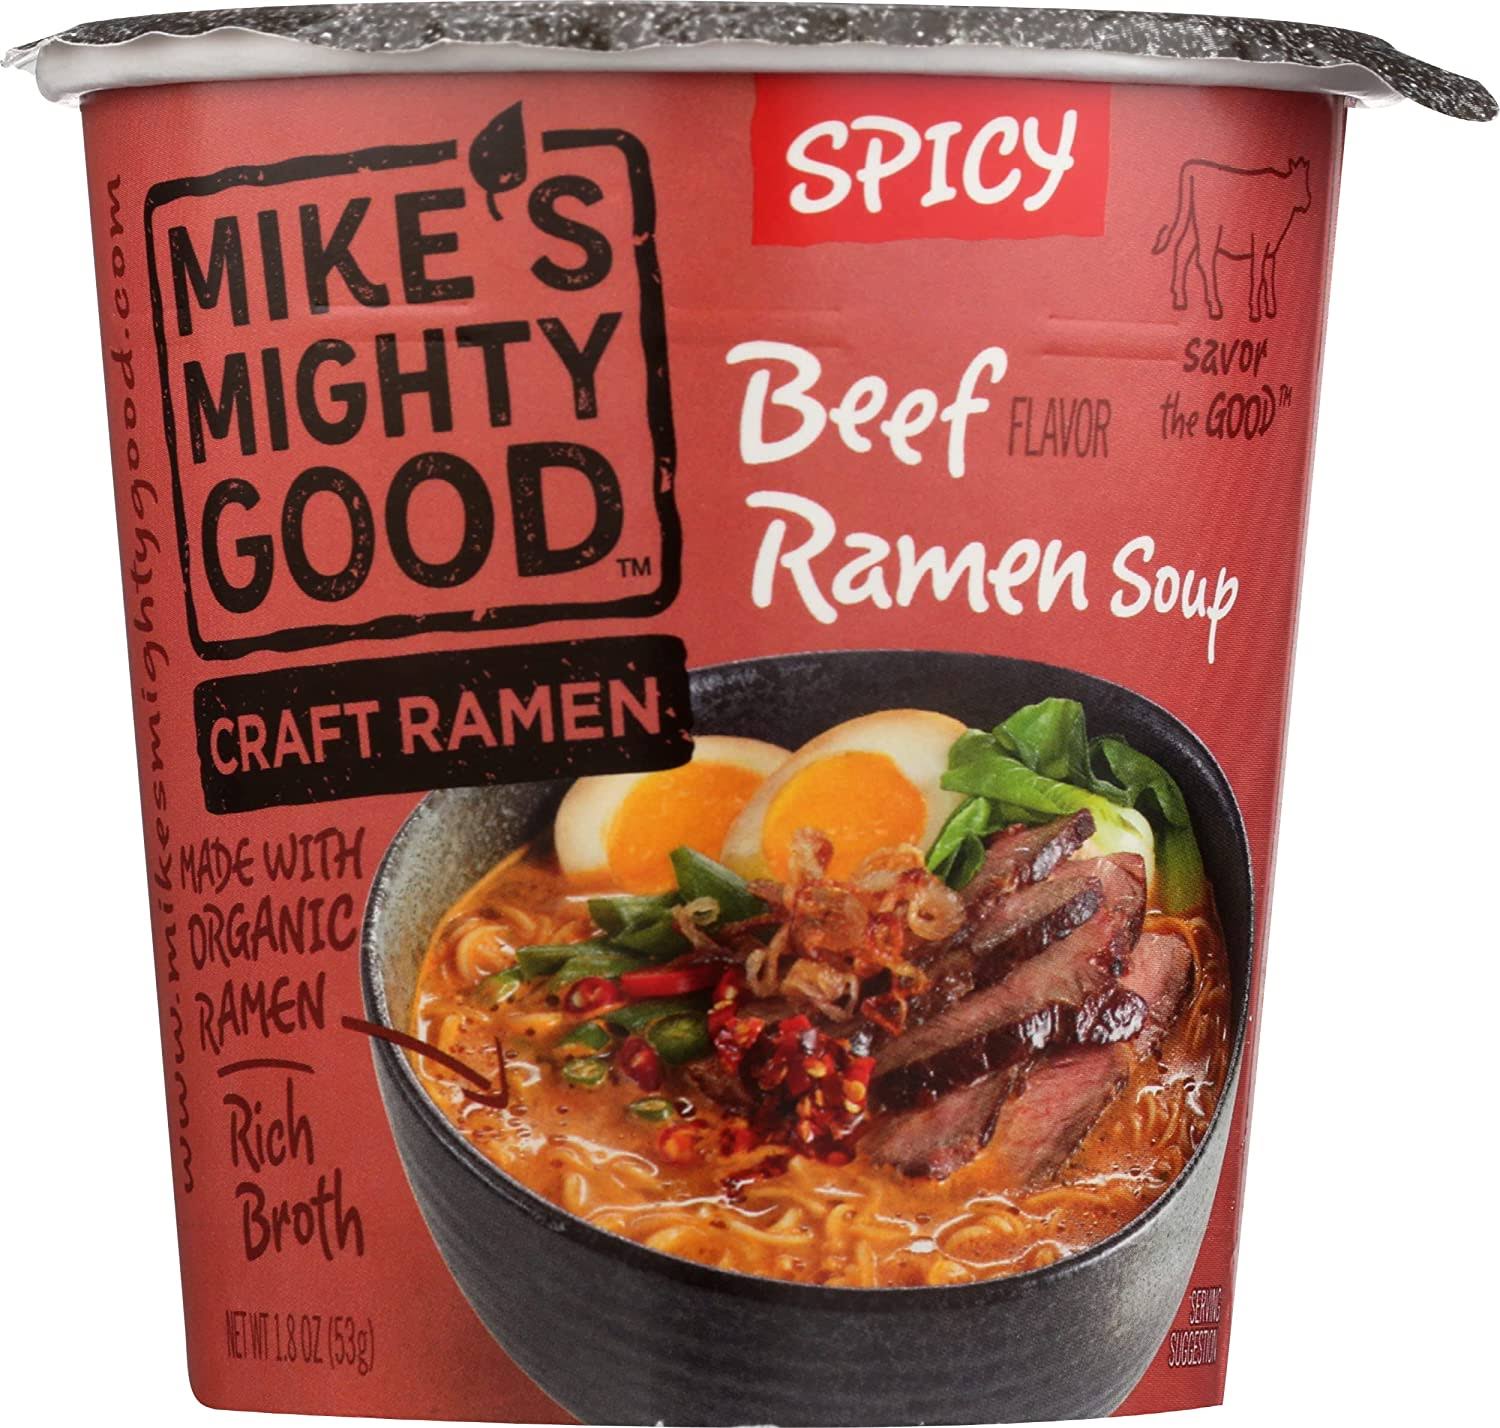 Mike's Mighty Good Craft Ramen Spicy Beef Flavor Ramen Soup 1.8 oz (53 g)